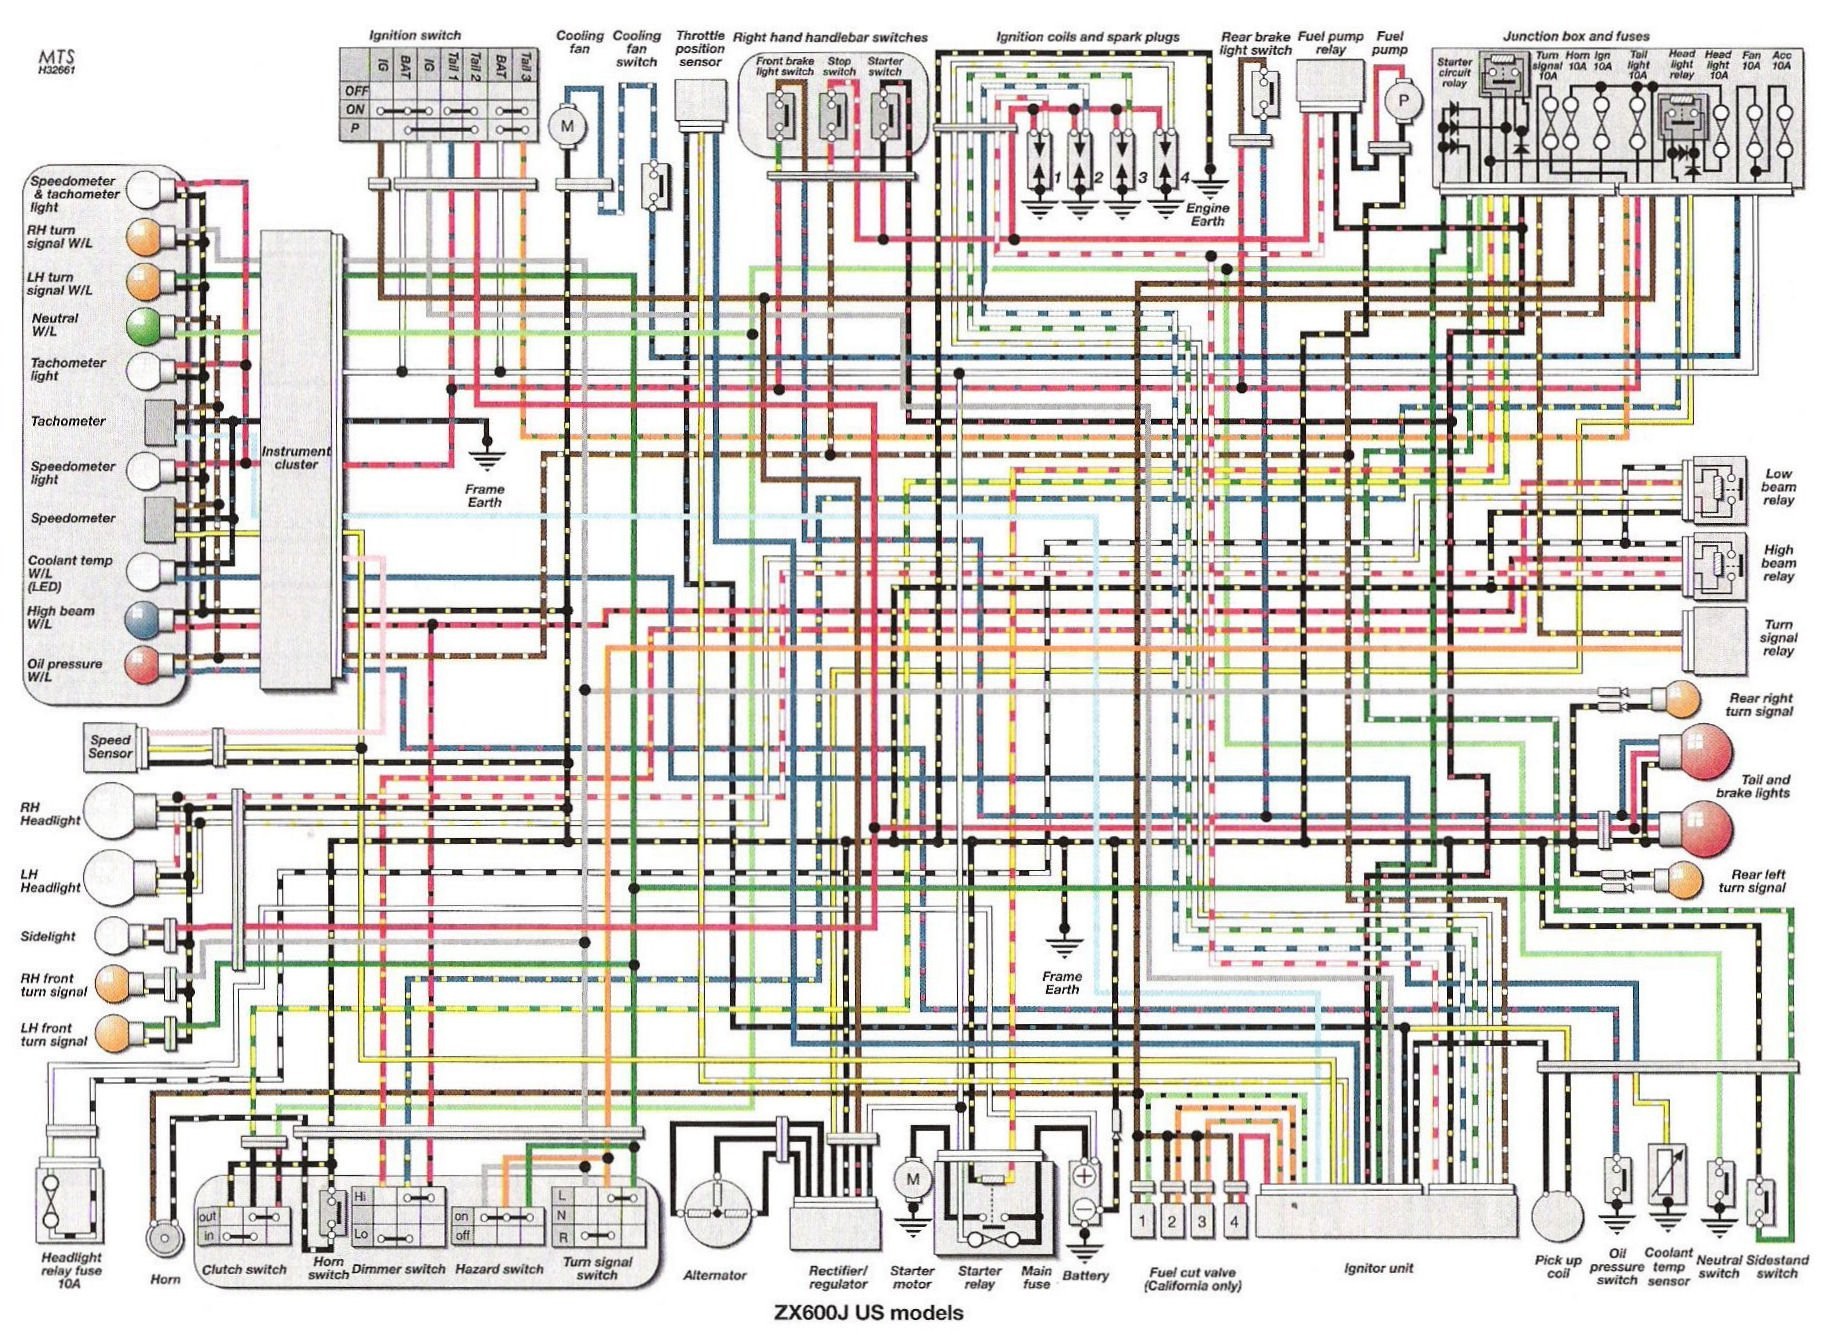 2002 r1 wiring diagram wiring diagram load yamaha r1 wiring diagram 1998 2002 r1 wiring diagram